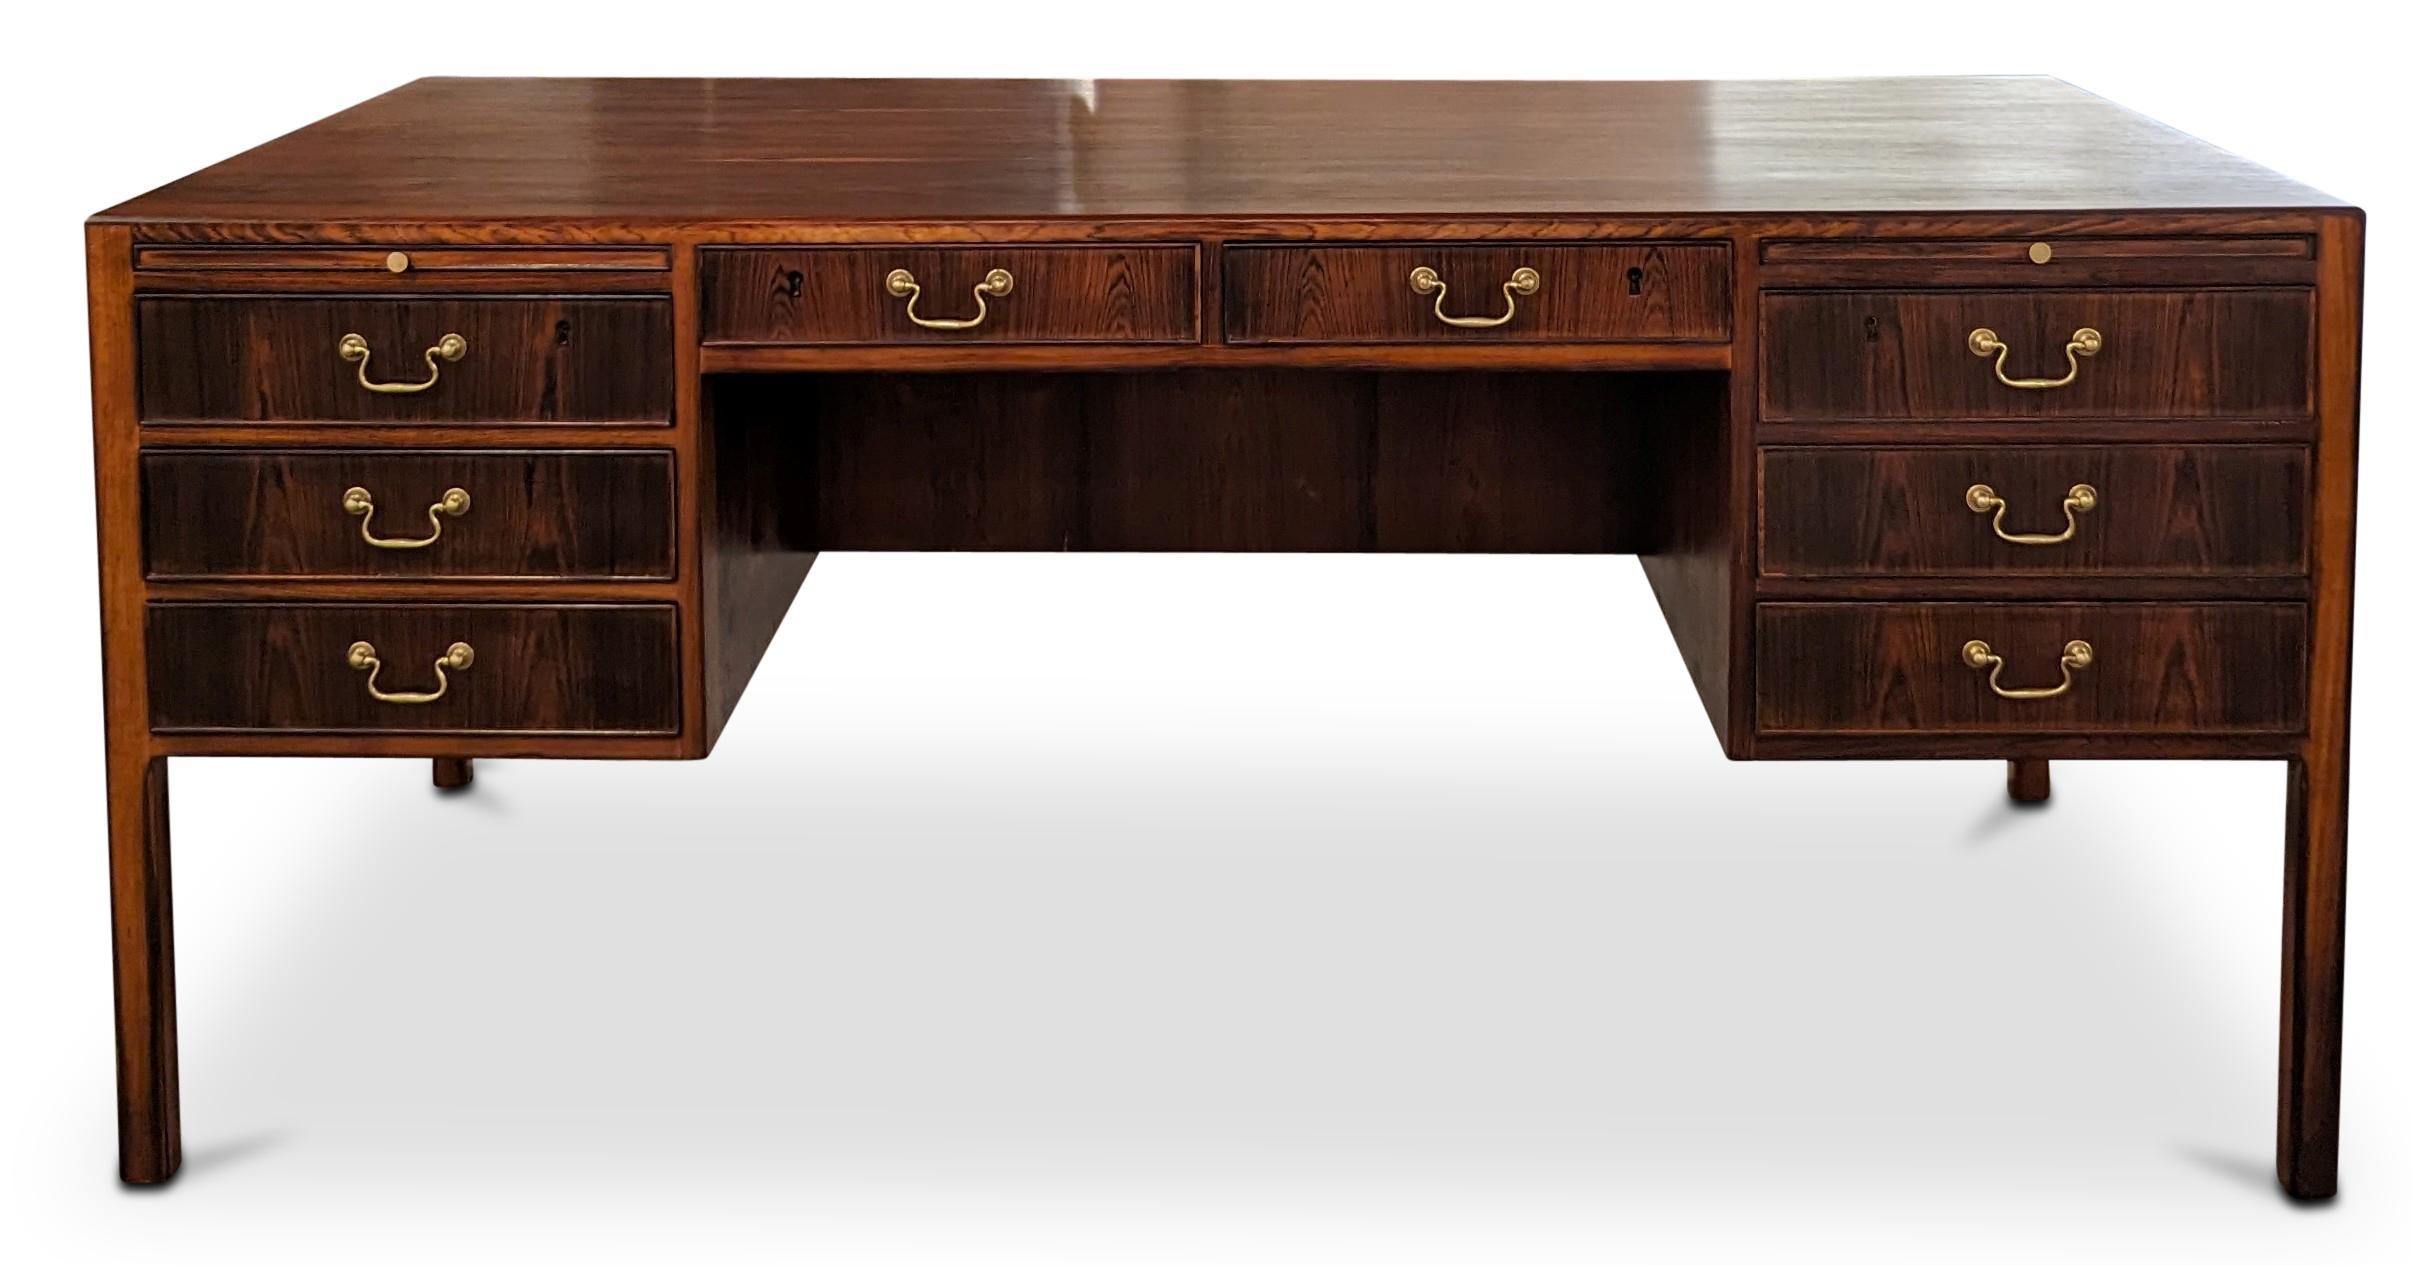 Scandinavian Modern Ole Wancher Rosewood Desk - 0823177 Vintage Danish Mid Century For Sale